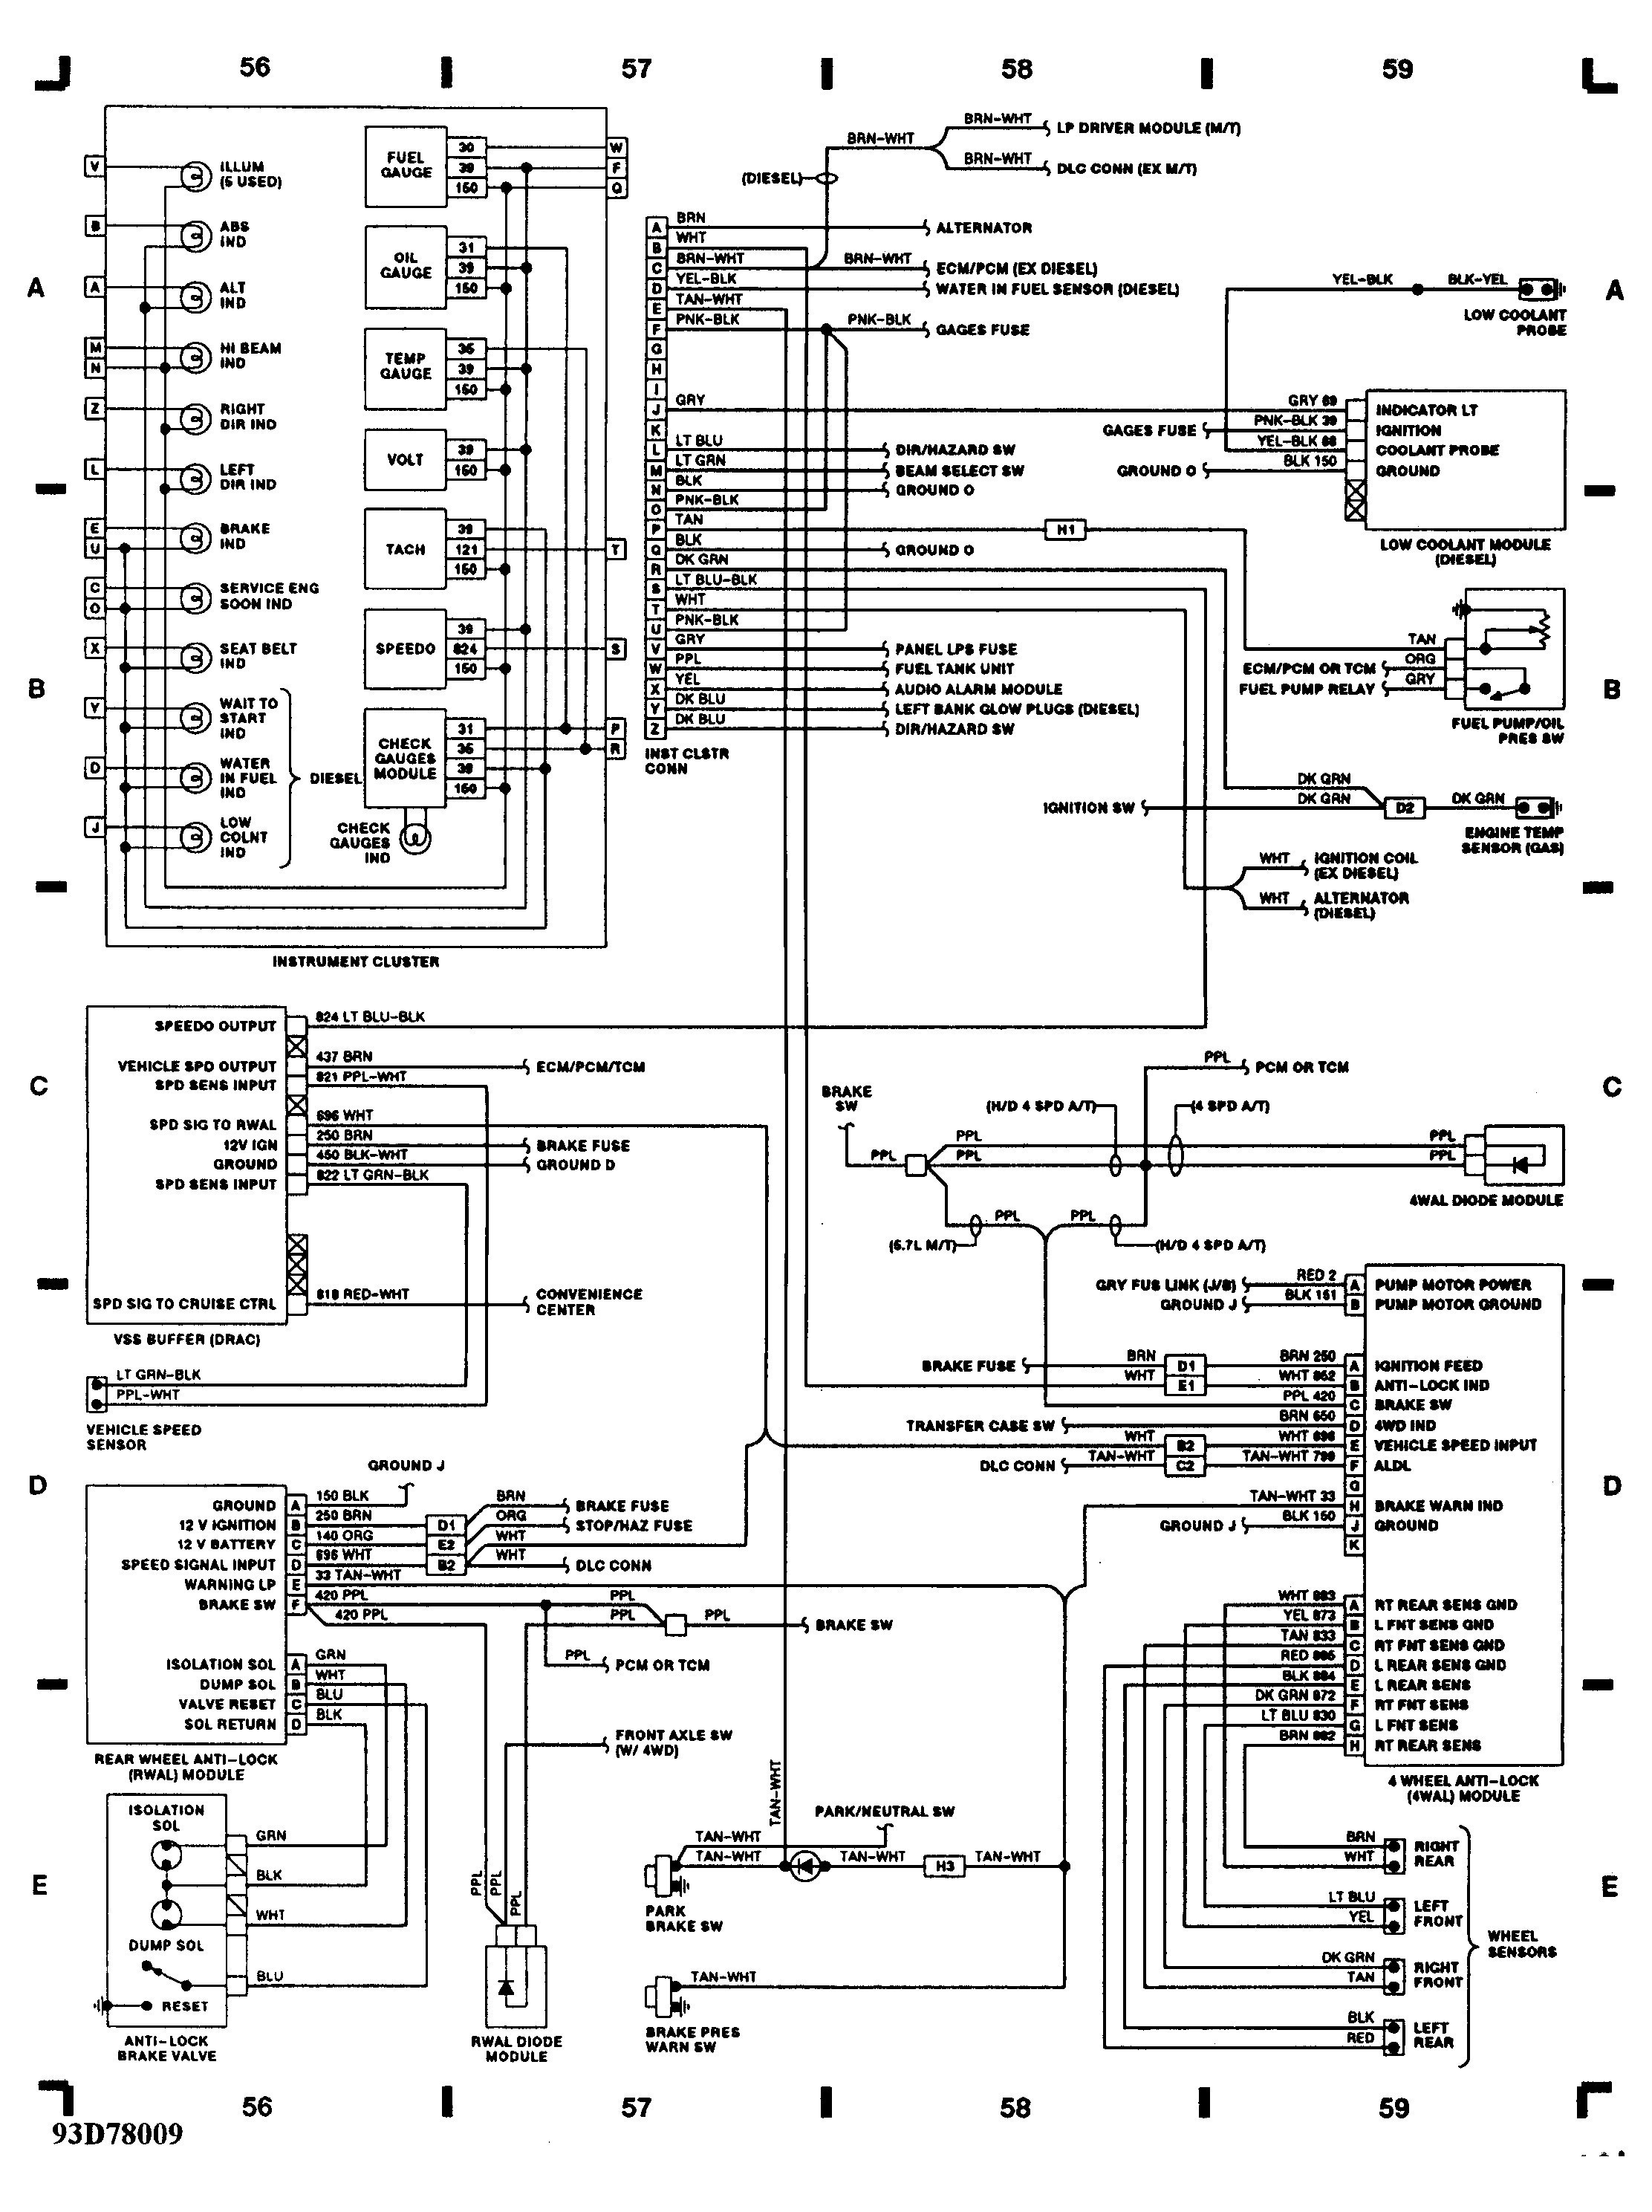 2000 Chevy Silverado Radio Wiring Diagram 2018 Chevy Silverado Wiring Diagram – Wiring Diagram Collection